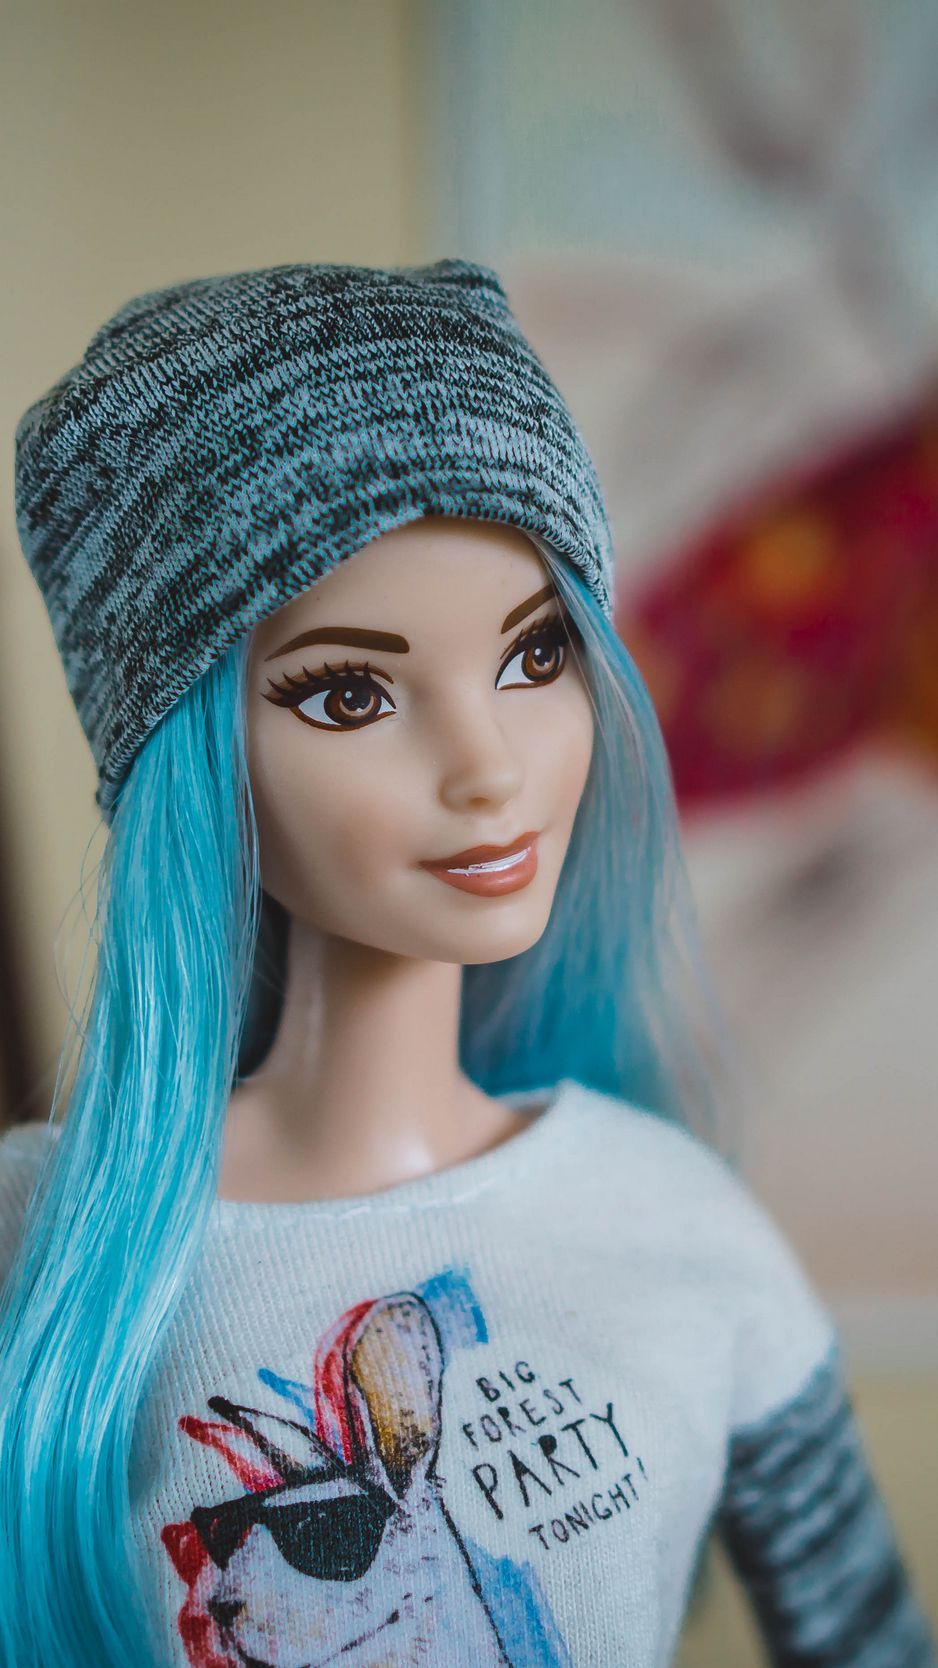 Download wallpaper 938x1668 doll, barbie, style, fashion, hat